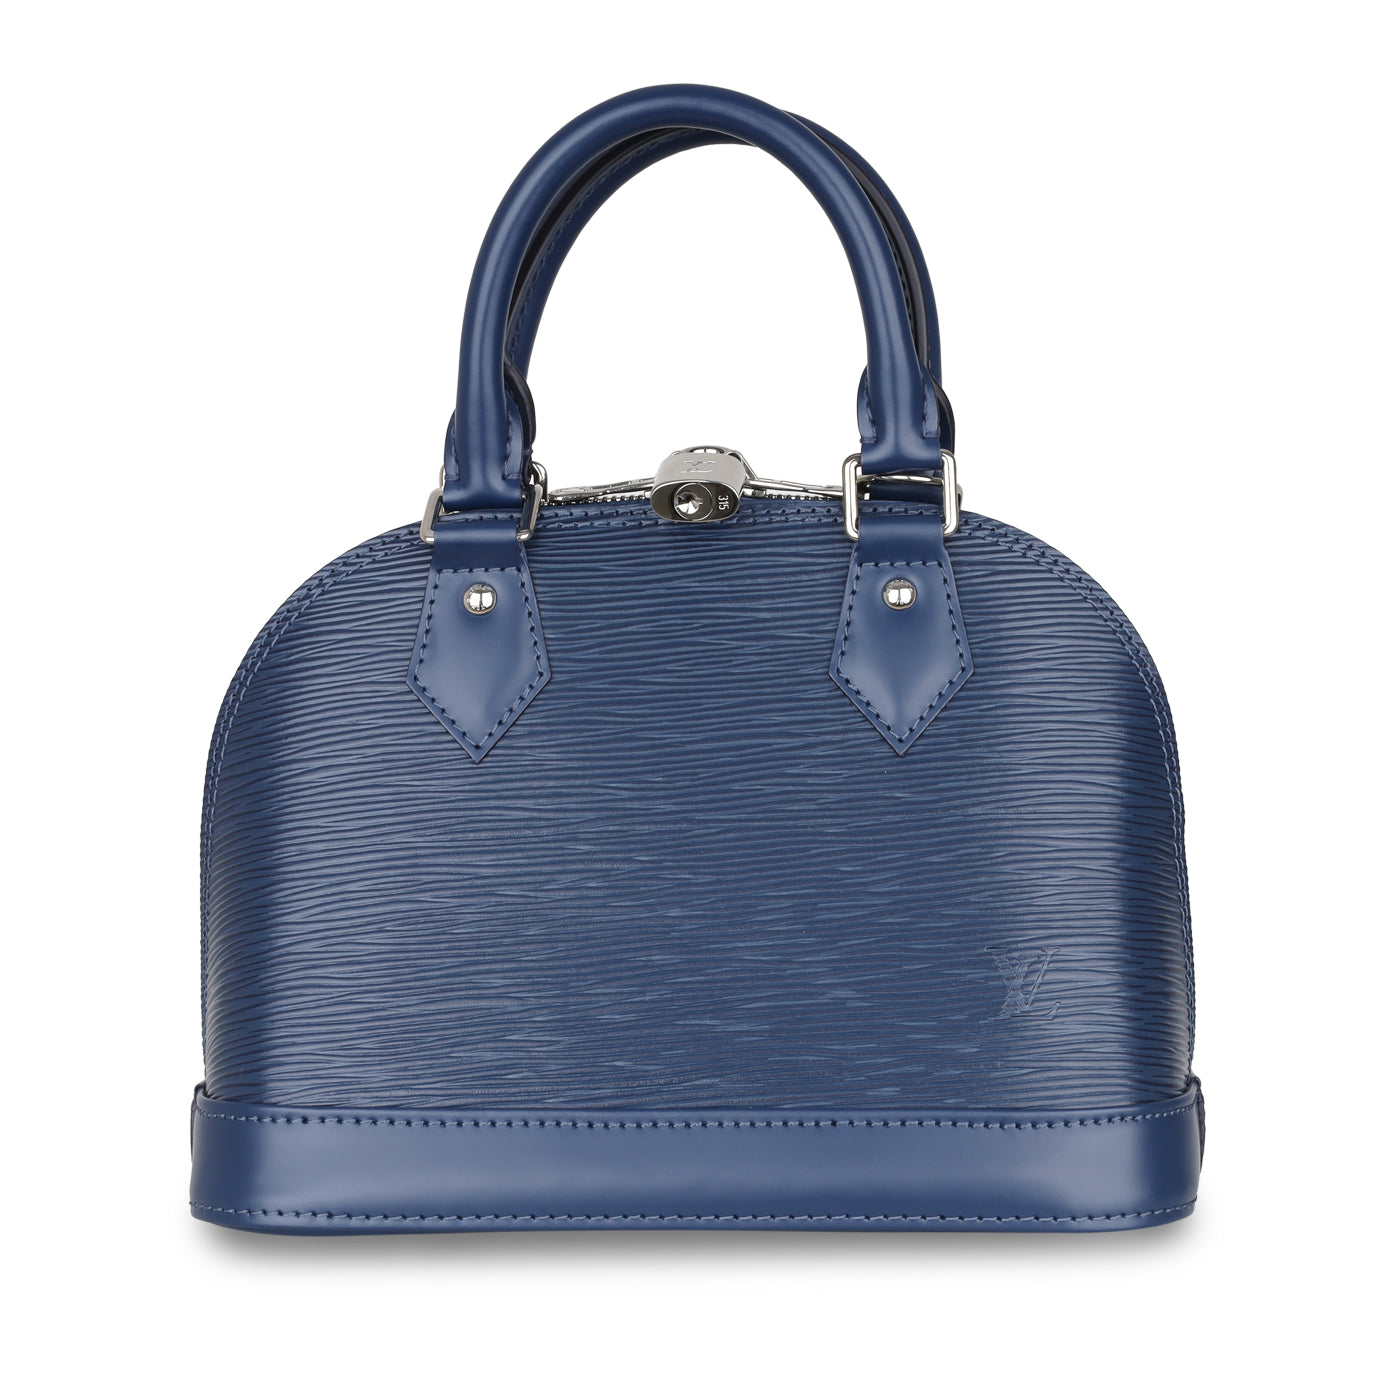 Pre-owned Louis Vuitton Handbag In Navy